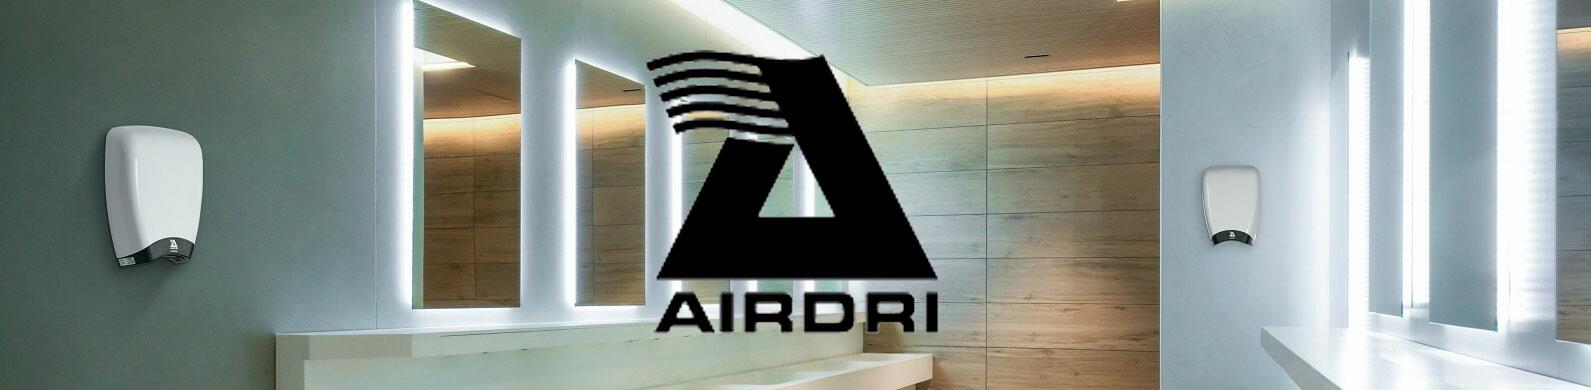 Airdri Quazar Low Noise Hand Dryer